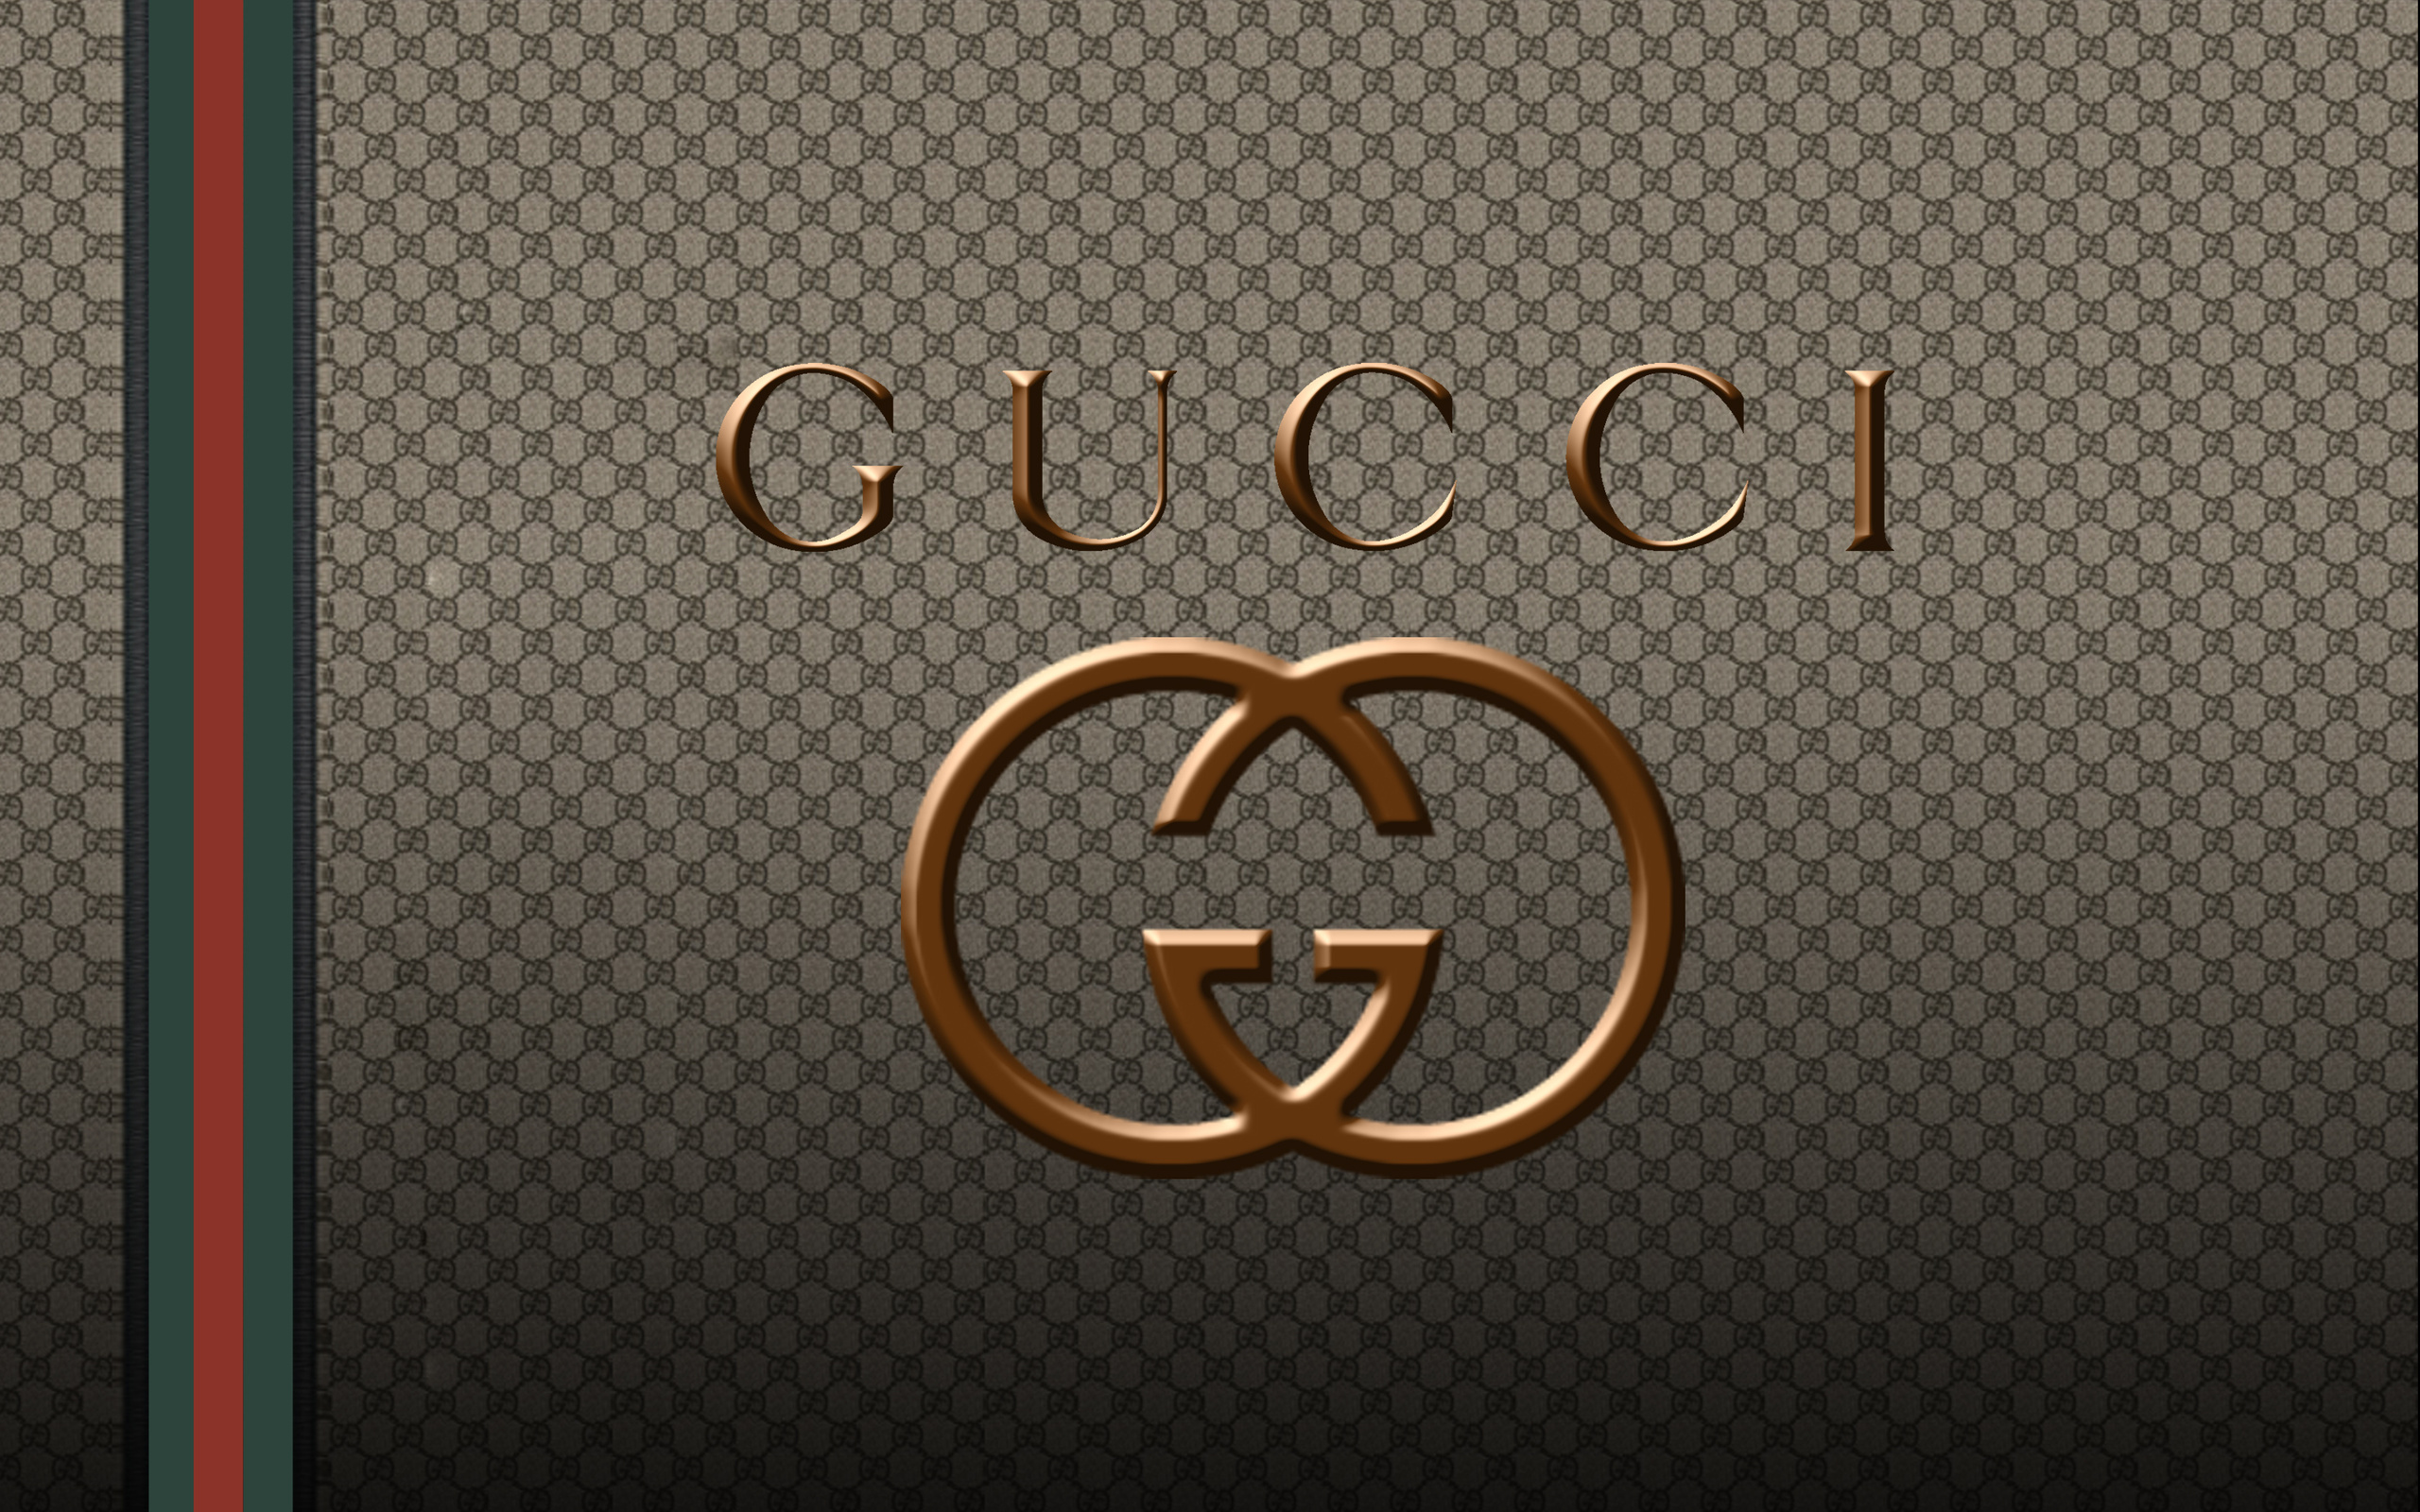 kalmeren Netto drie 22+] Gucci.com Wallpapers - WallpaperSafari